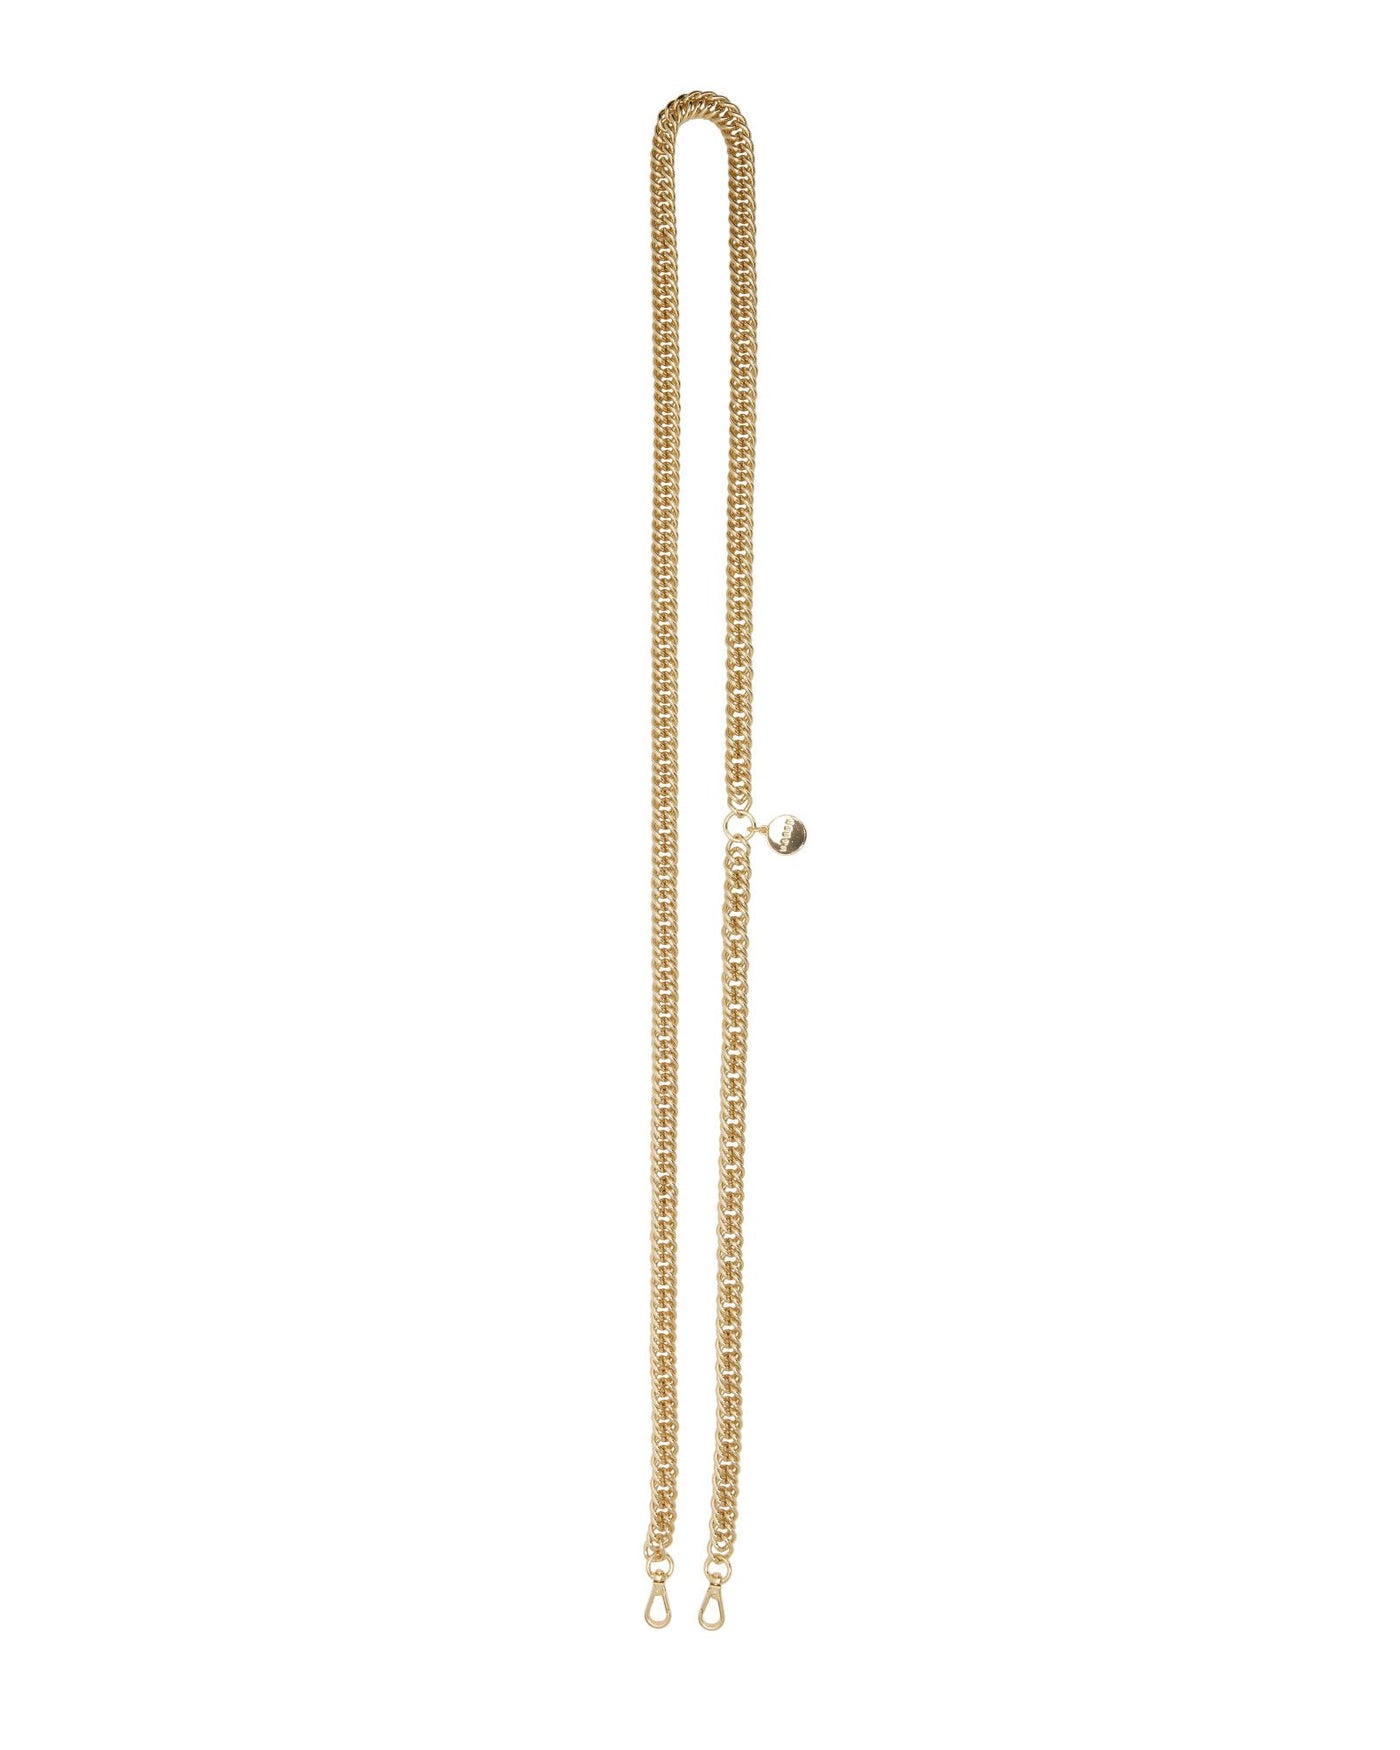 Feature Strap - Gold Curb Chain